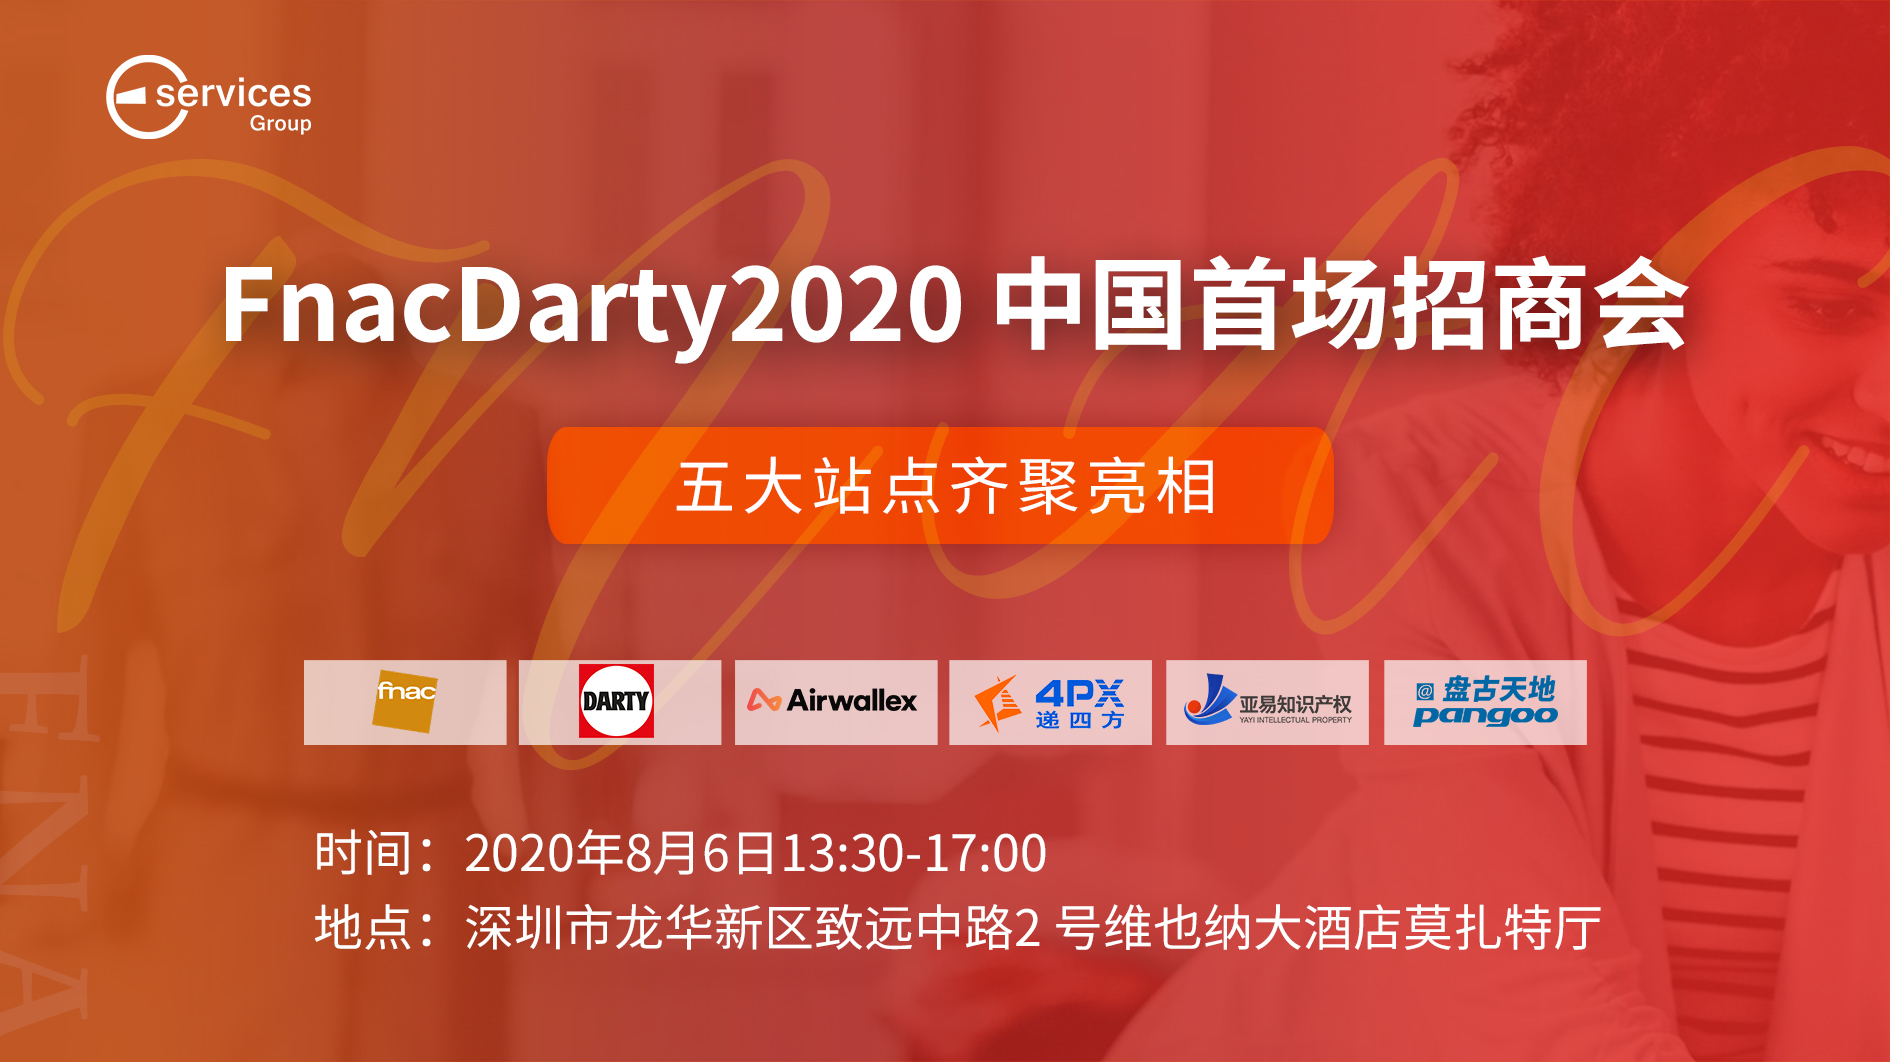 FnacDarty2020中国首场招商会 ——五大站点齐聚亮相